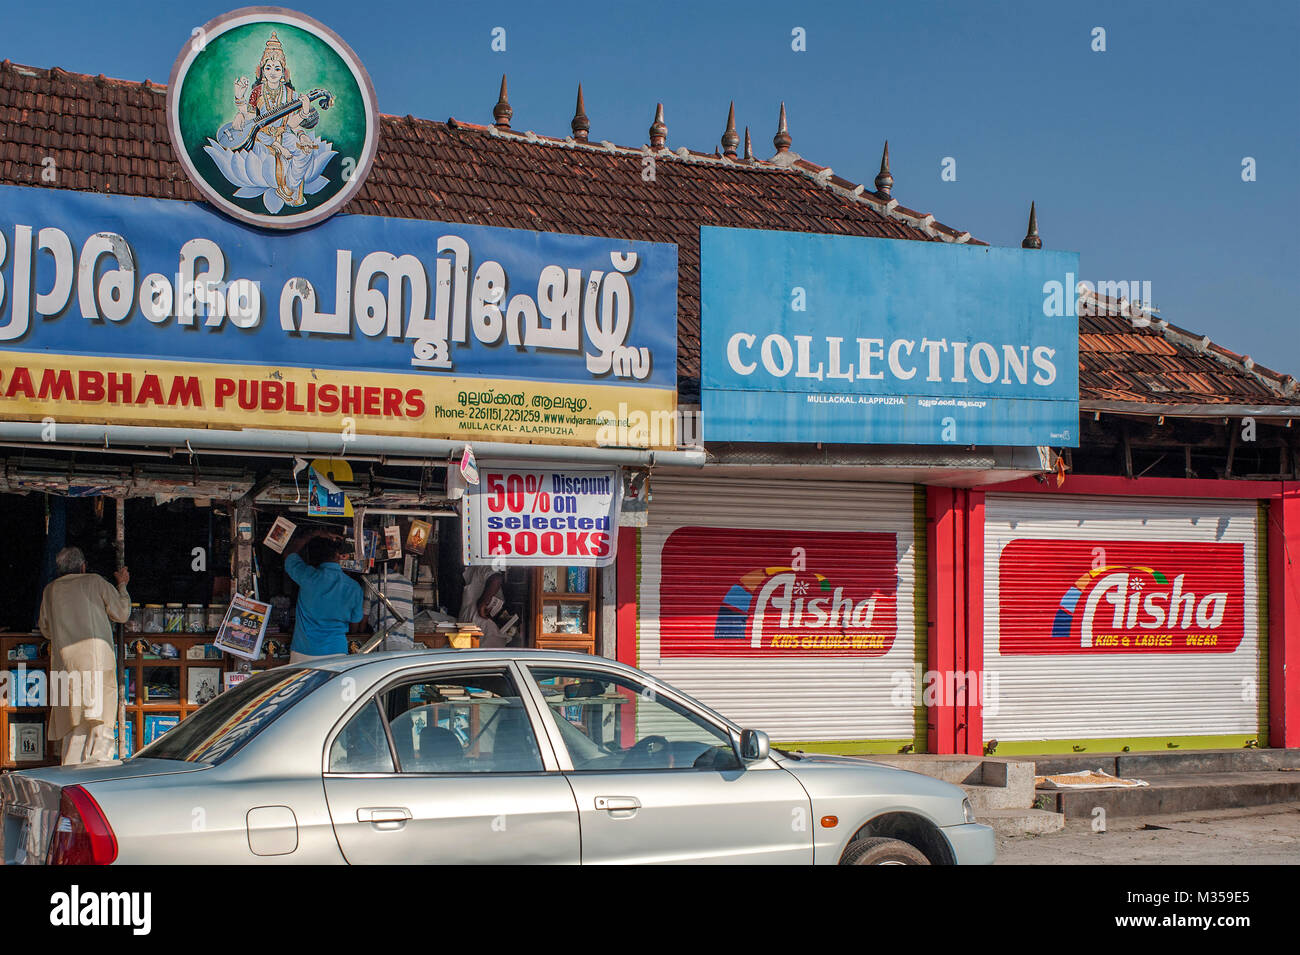 Book Stall, Mullakkal, Allappuzha, Kerala, India, Asia Stock Photo